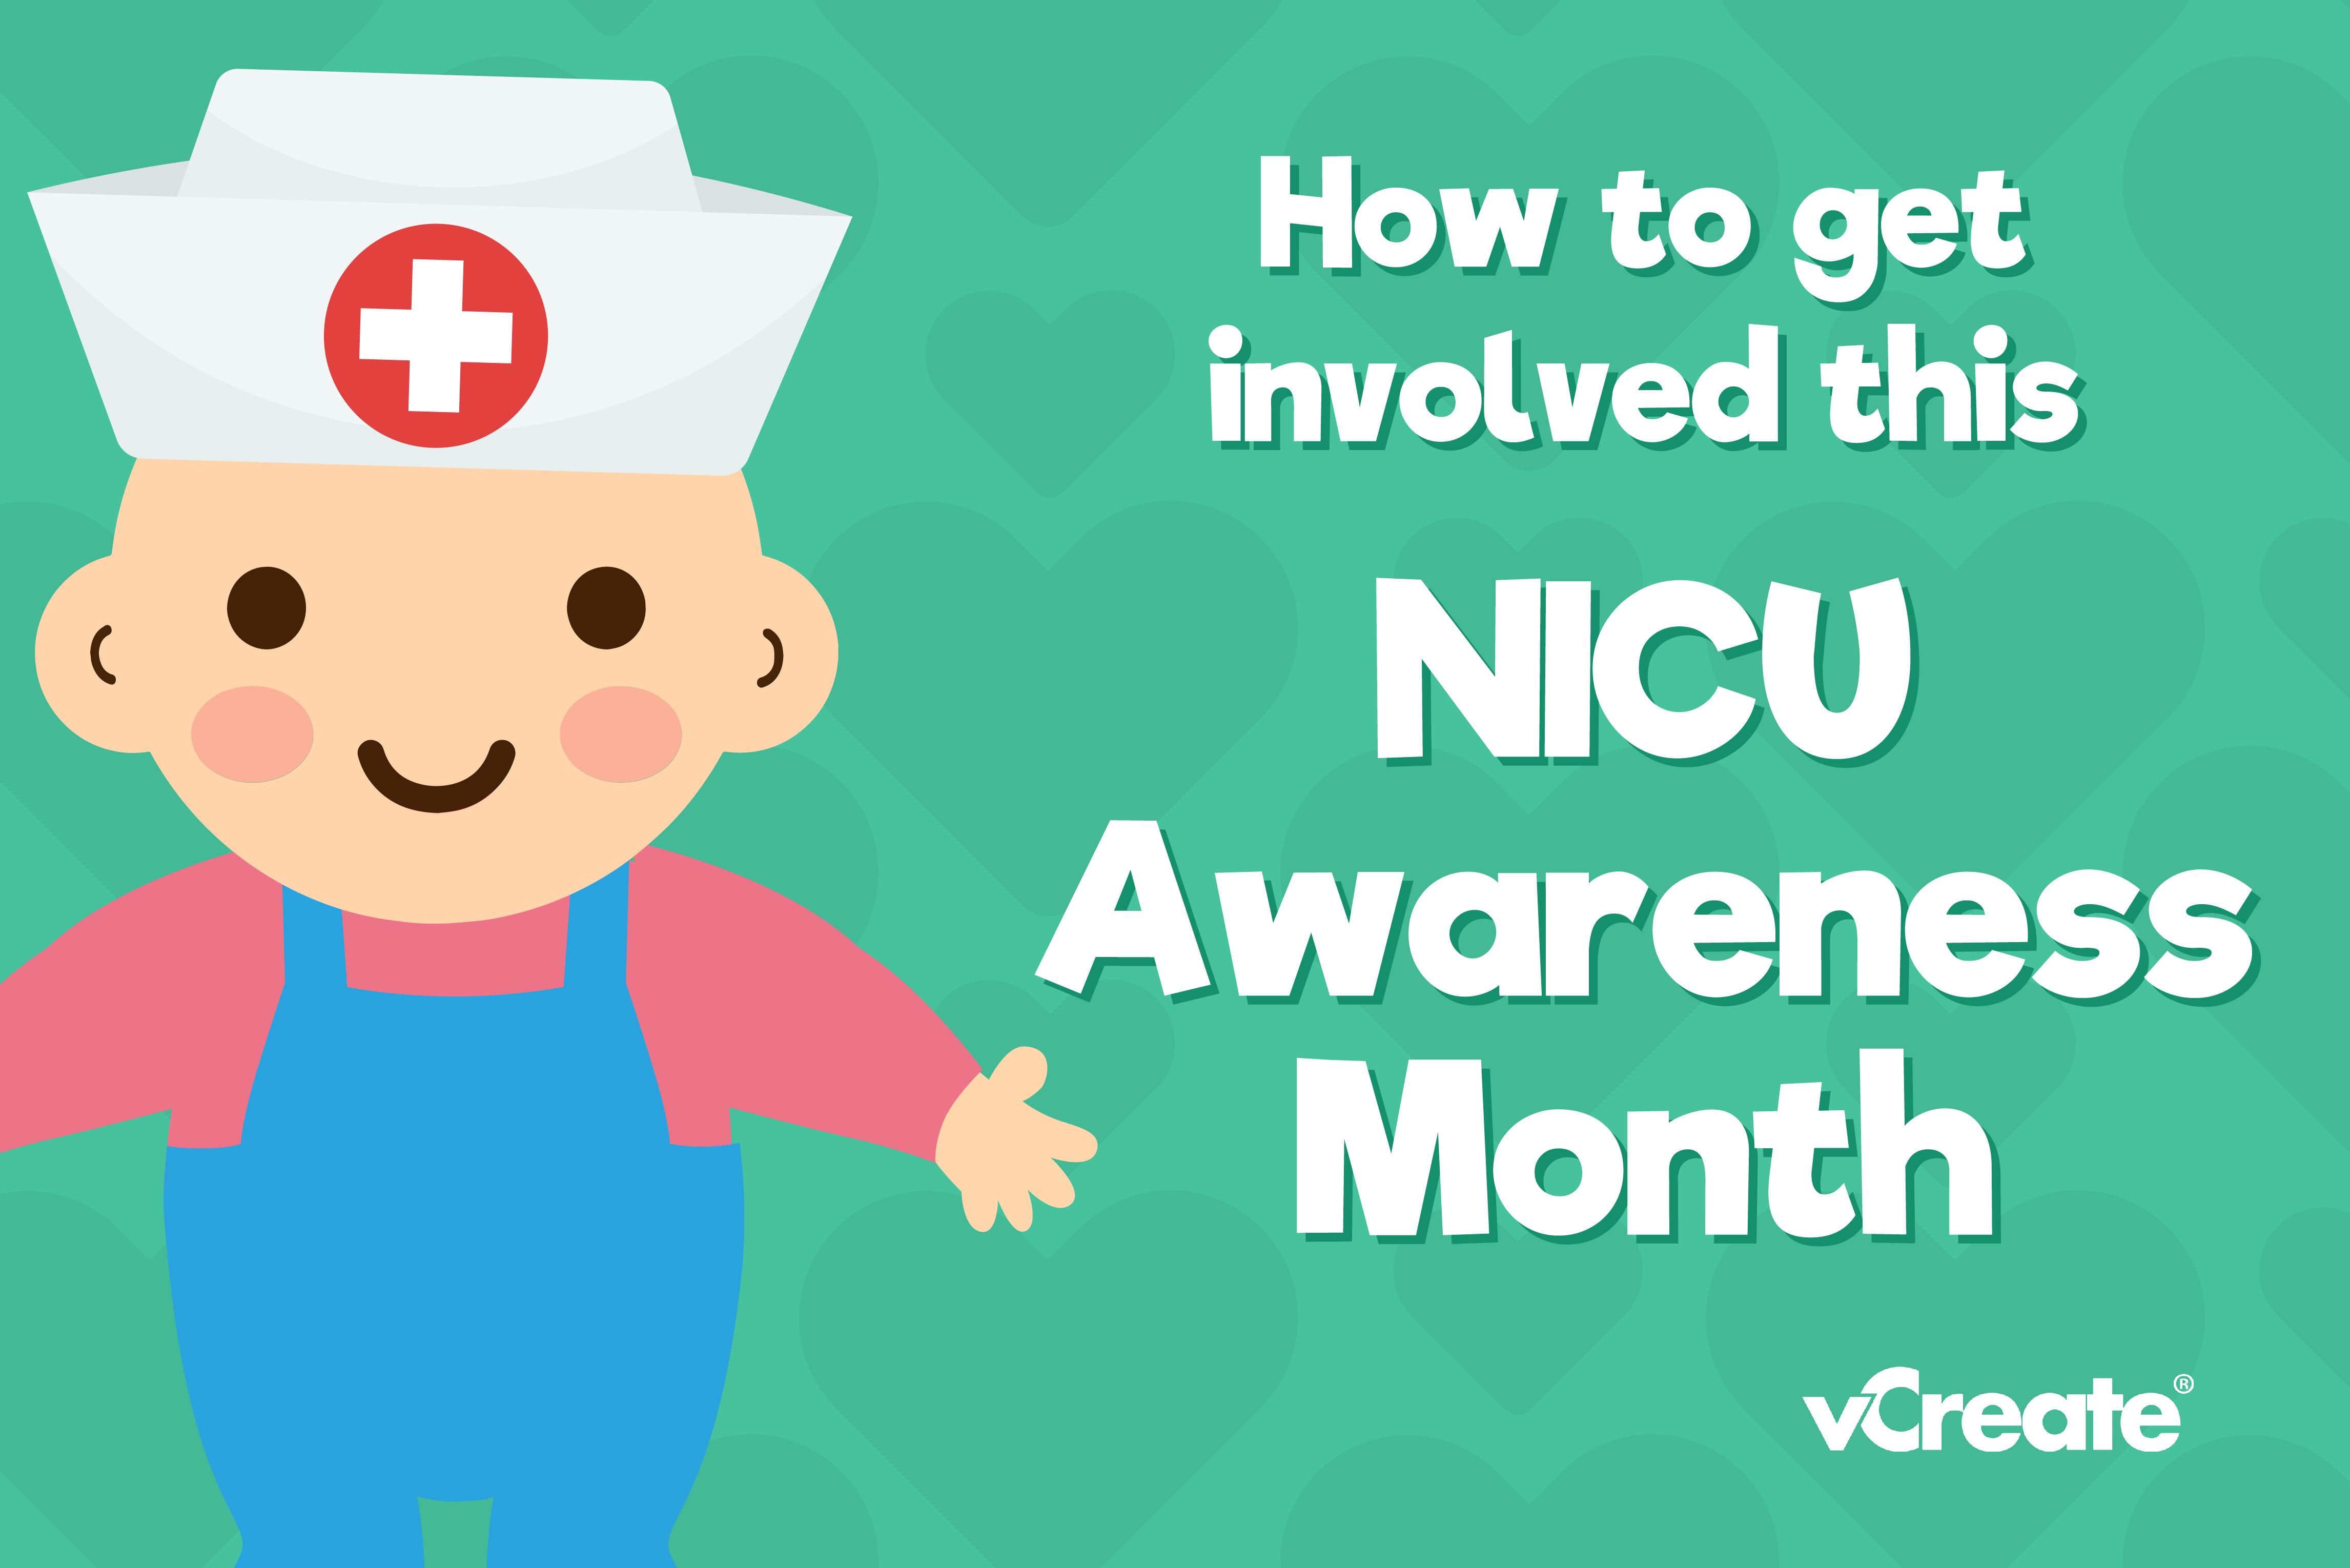 Get involved this NICU Awareness Month!